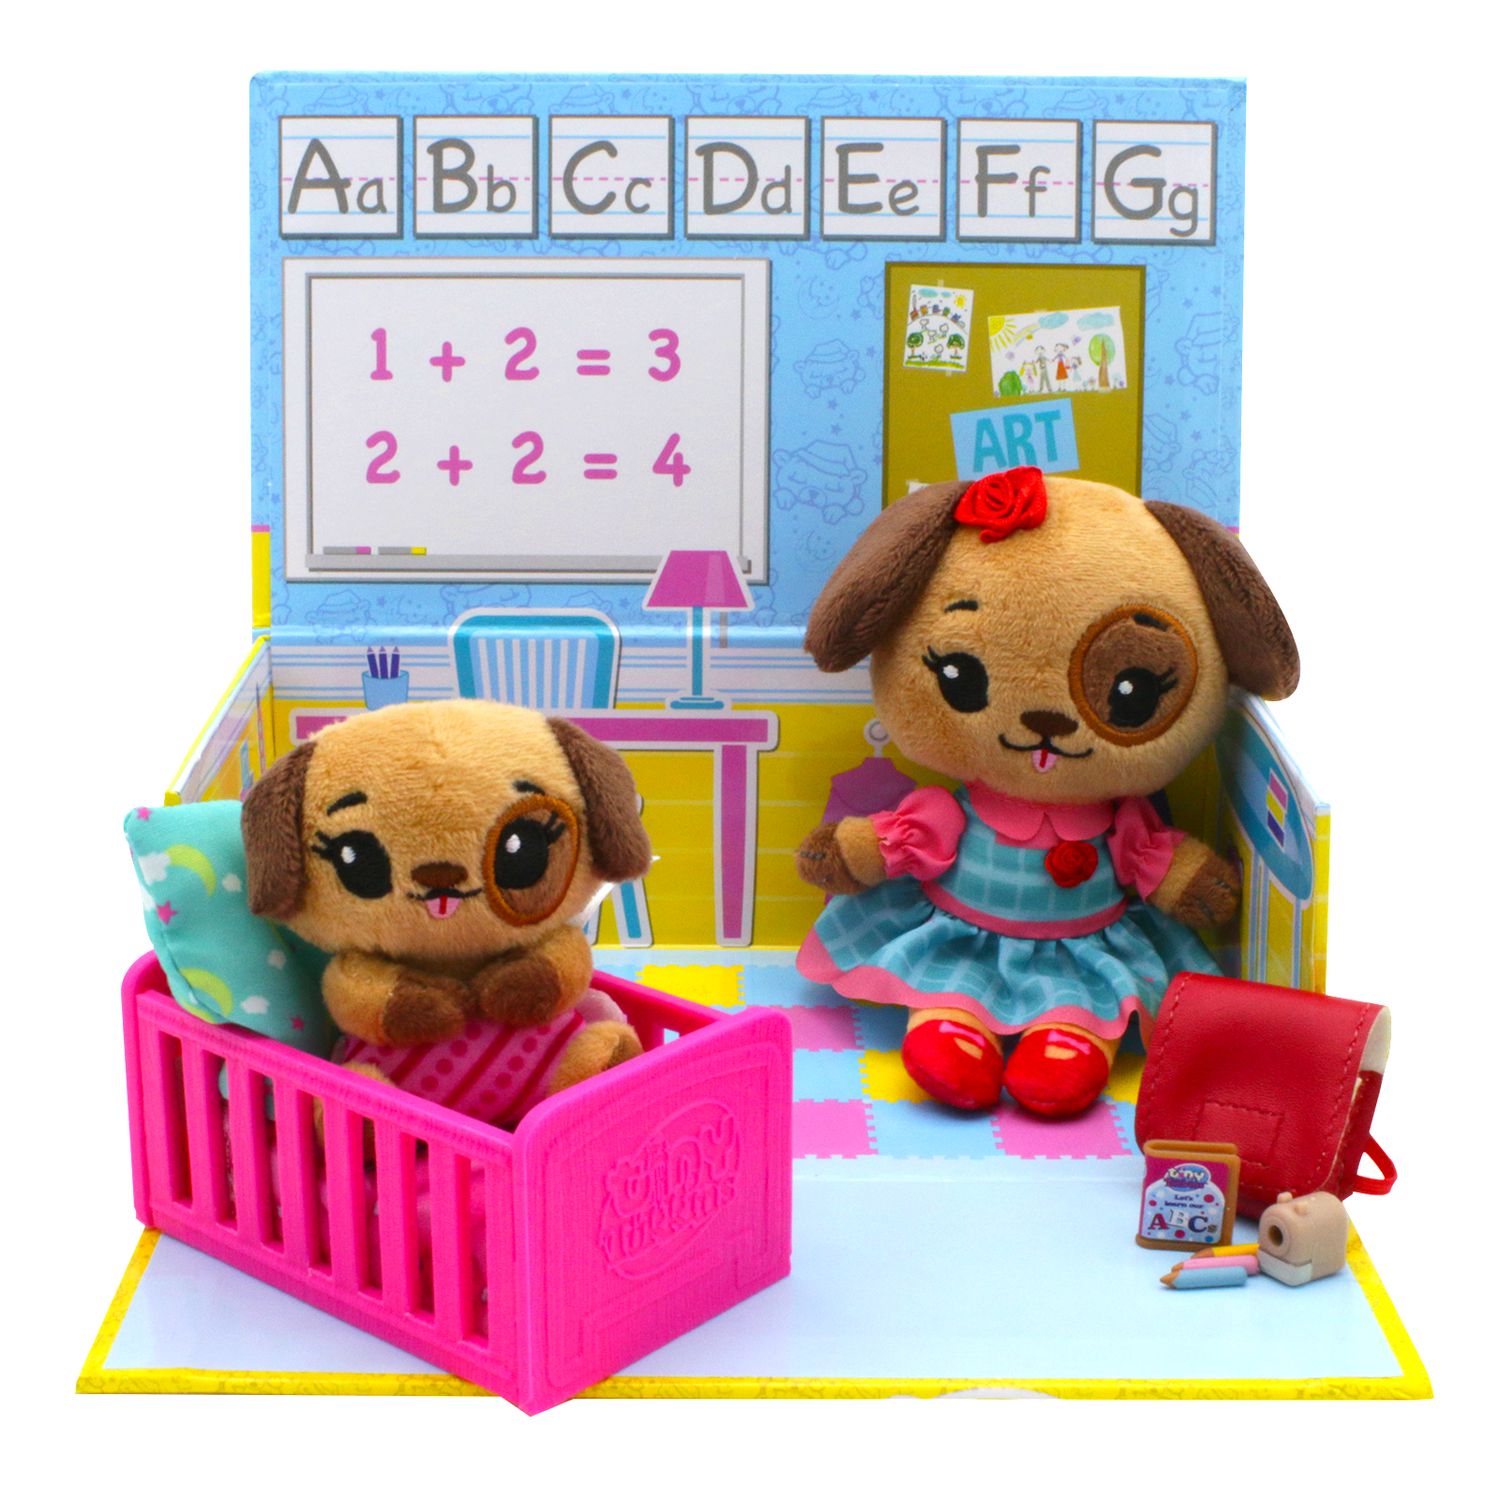 Cuddle N’ Play Naptime Nursery Tiny Tukkins Set Of 3 Preschool playtime